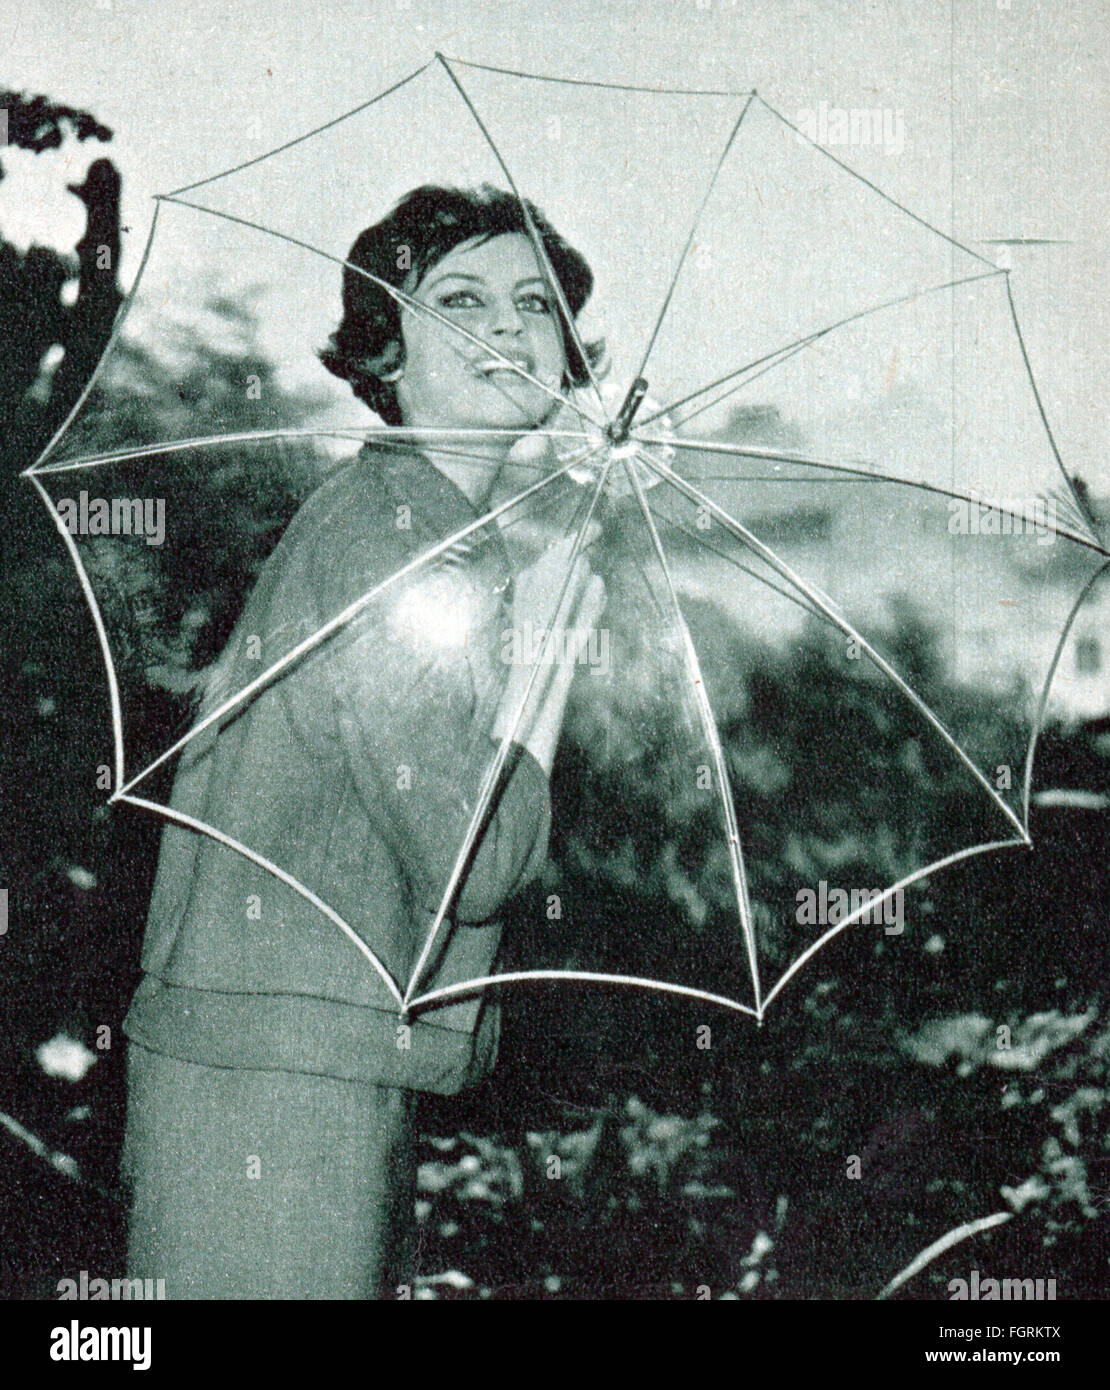 Mode, 50er Jahre, Schaufensterpuppe mit transparentem Regenschirm, 1959,  Additional-Rights-Clearences-not available Stockfotografie - Alamy